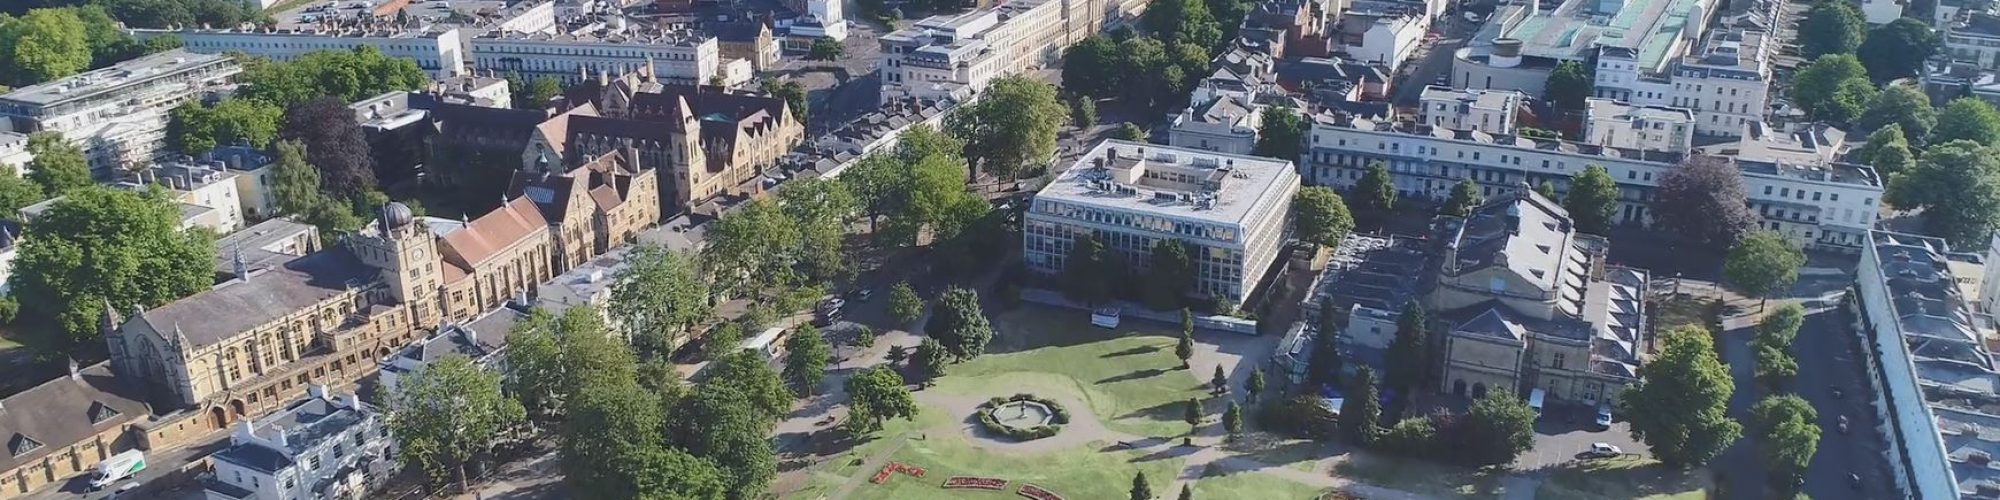 Cheltenham_Imperial Gardens Aerial